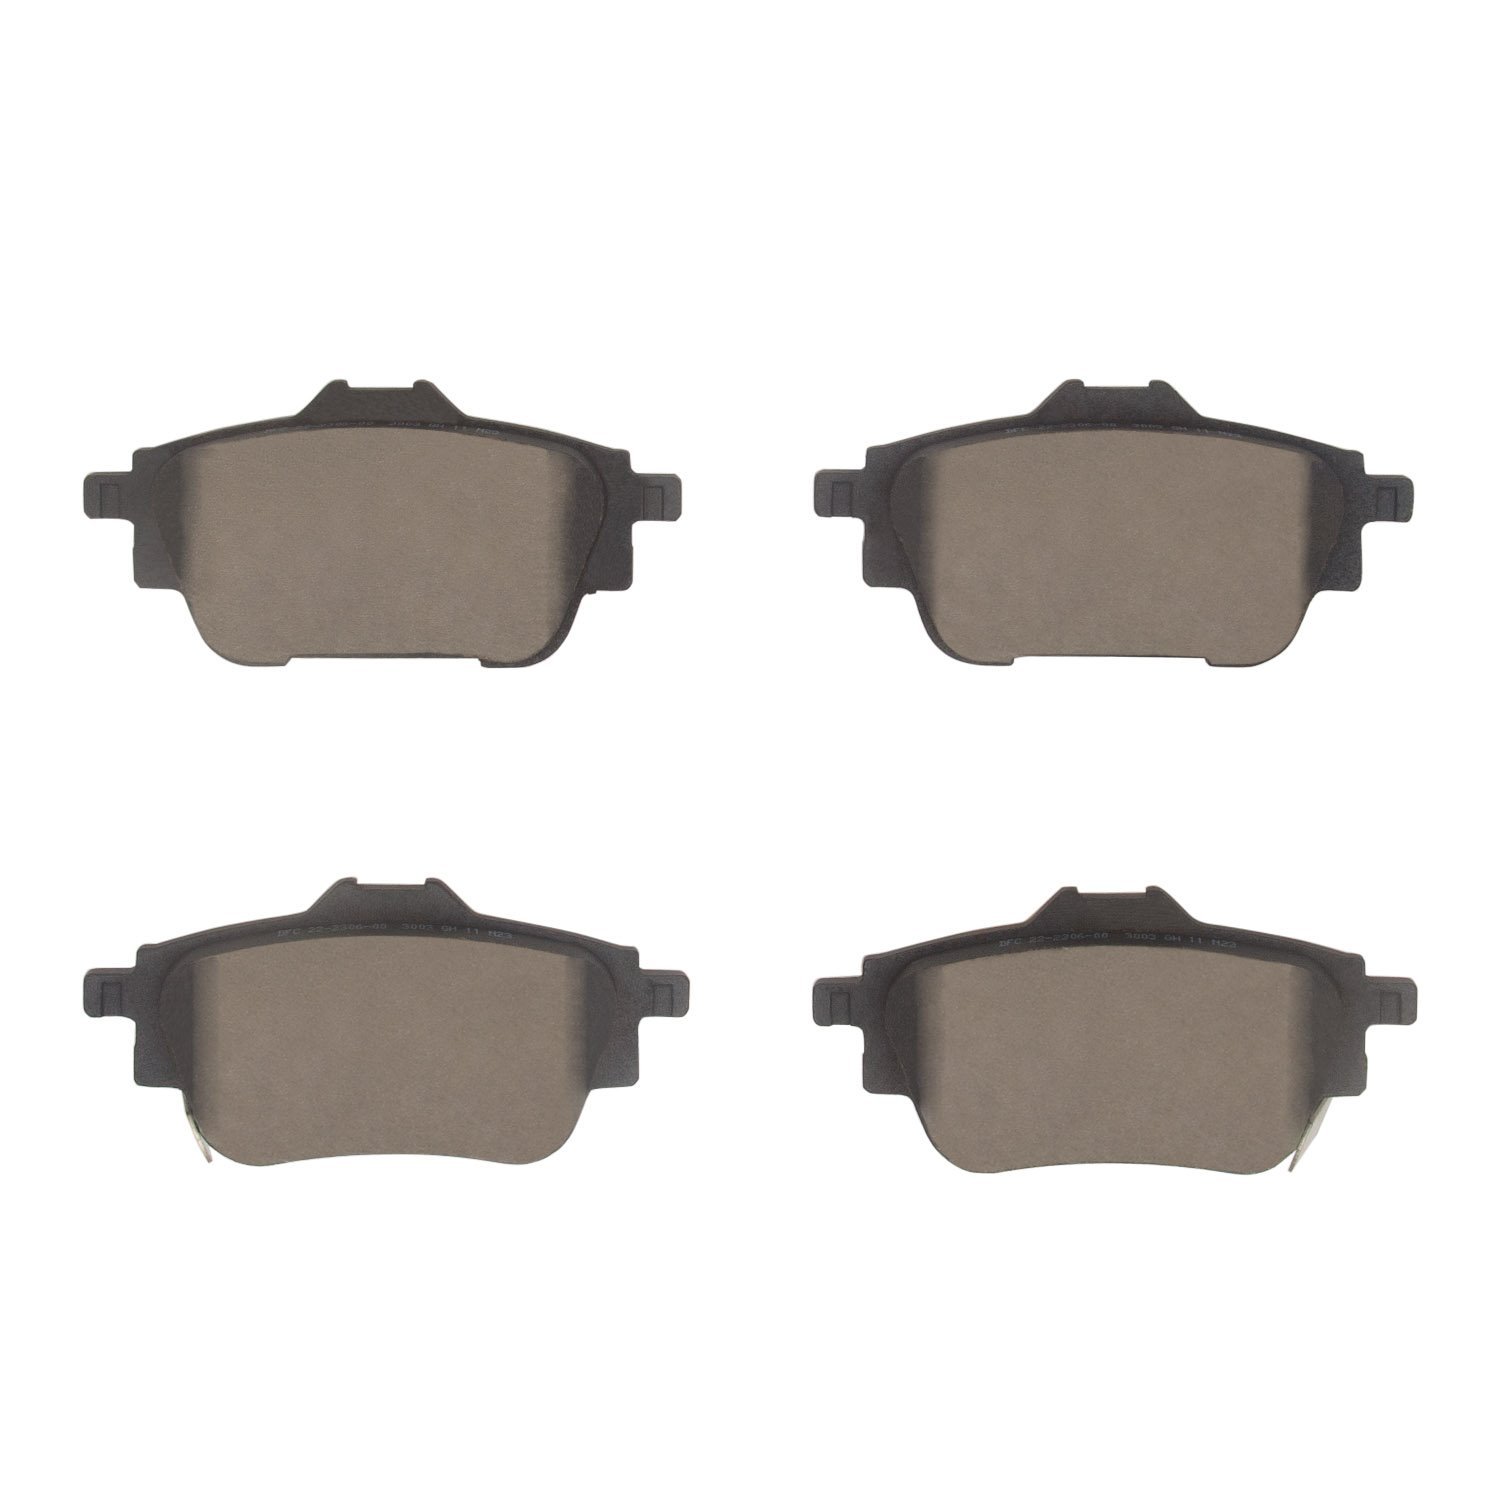 Ceramic Brake Pads, Fits Select Infiniti/Nissan, Position: Rear